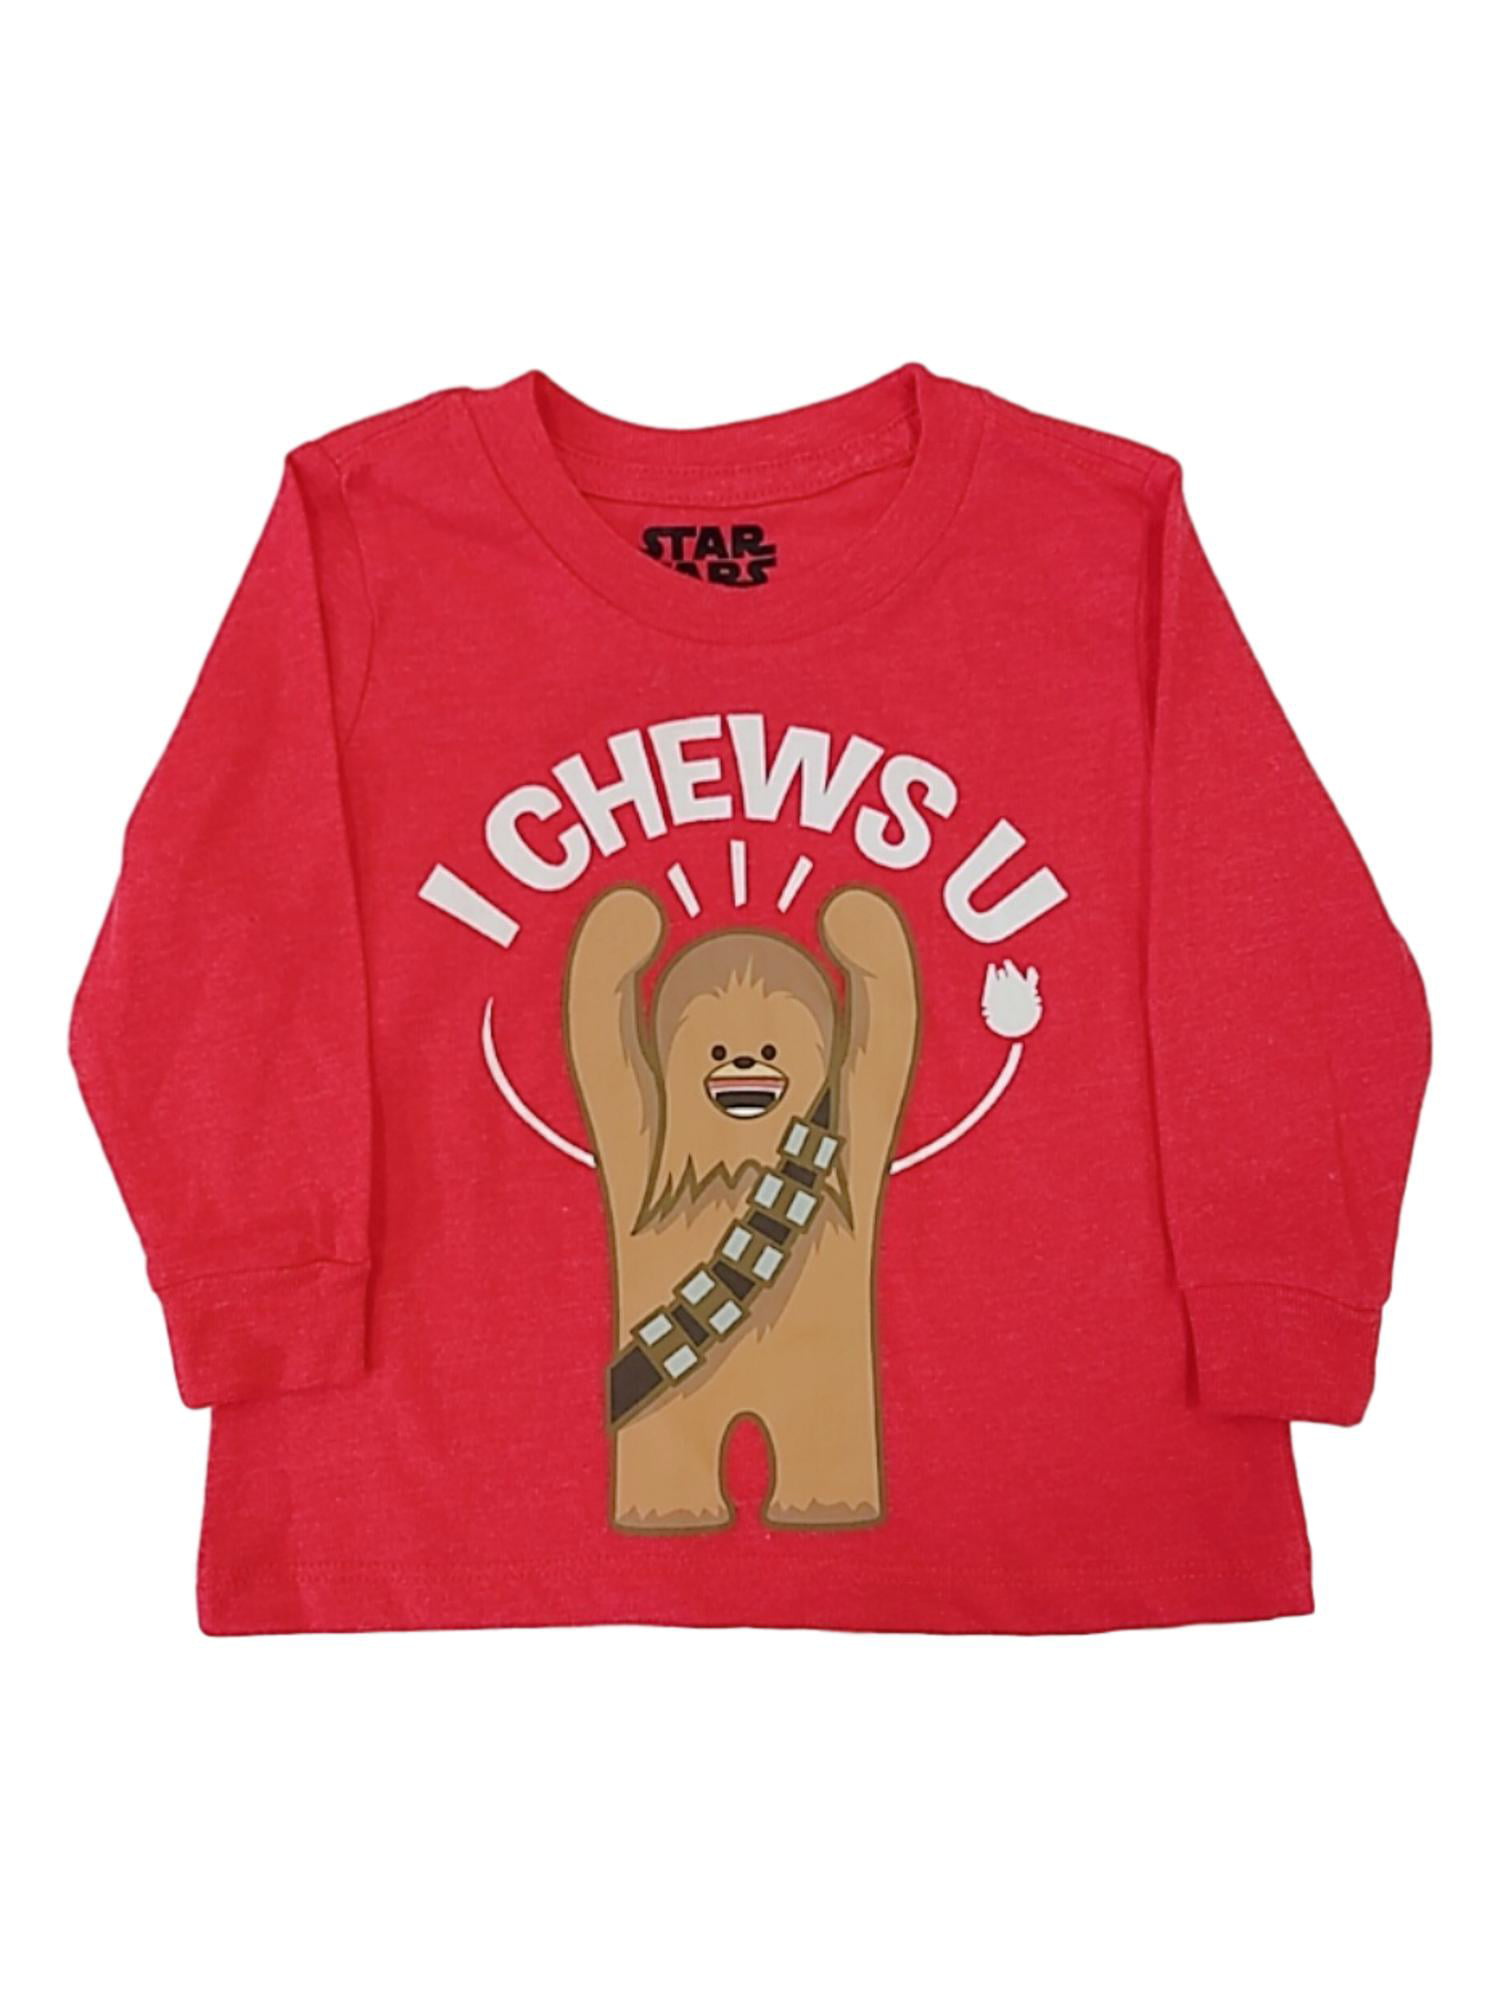 Red Long Sleeve Shirt Star Wars Chewbaca I Chews U Toddler SIZE CHOICE 